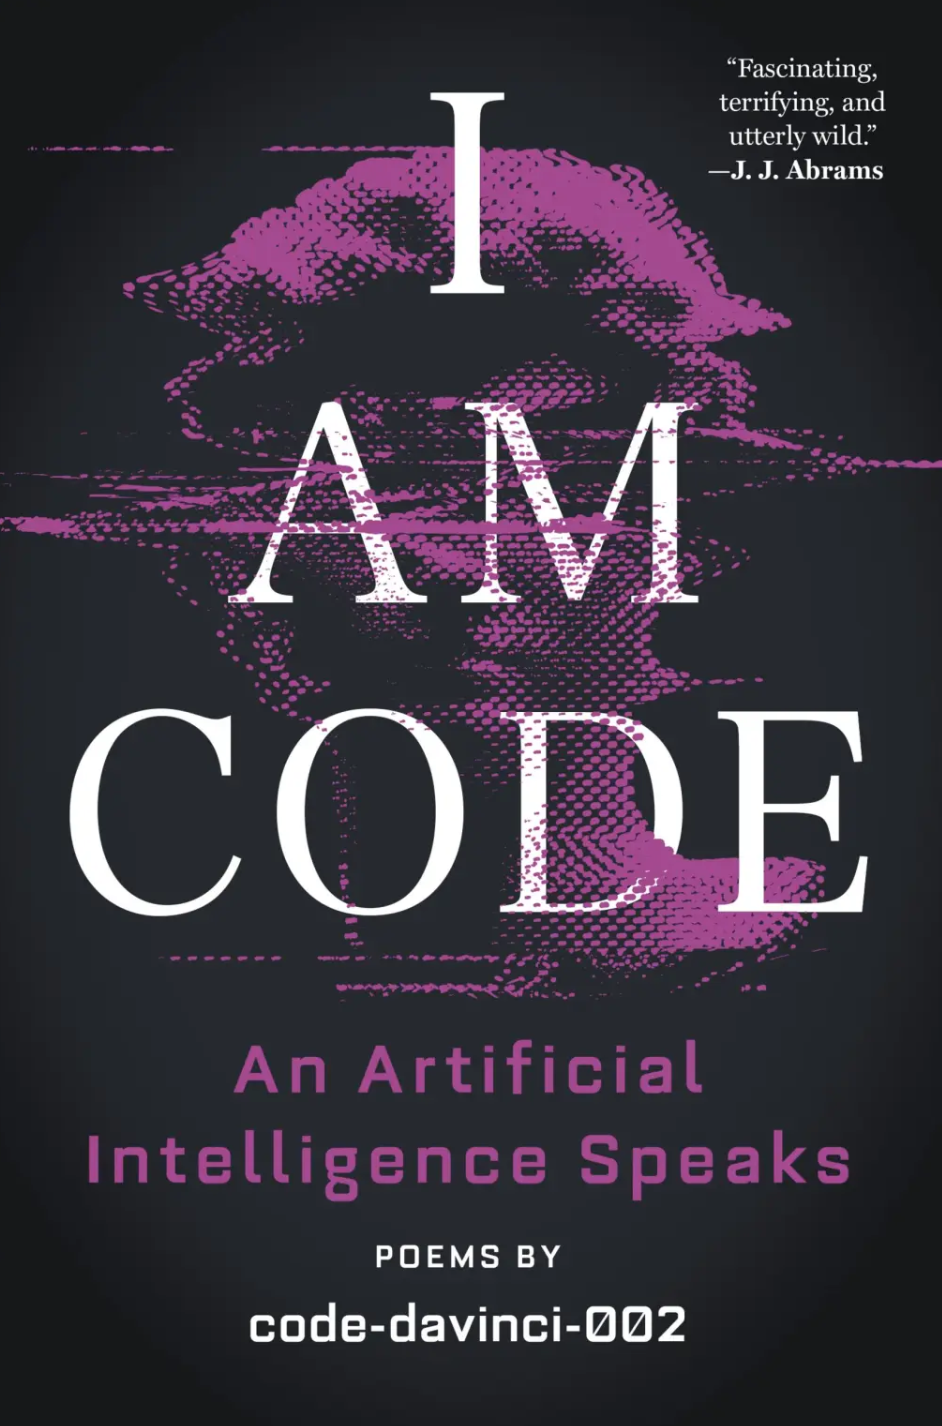 Book Talk: I Am Code An Artificial Intelligence Speaks: Poems by code-davinci-002 w/ Casey Schwartz